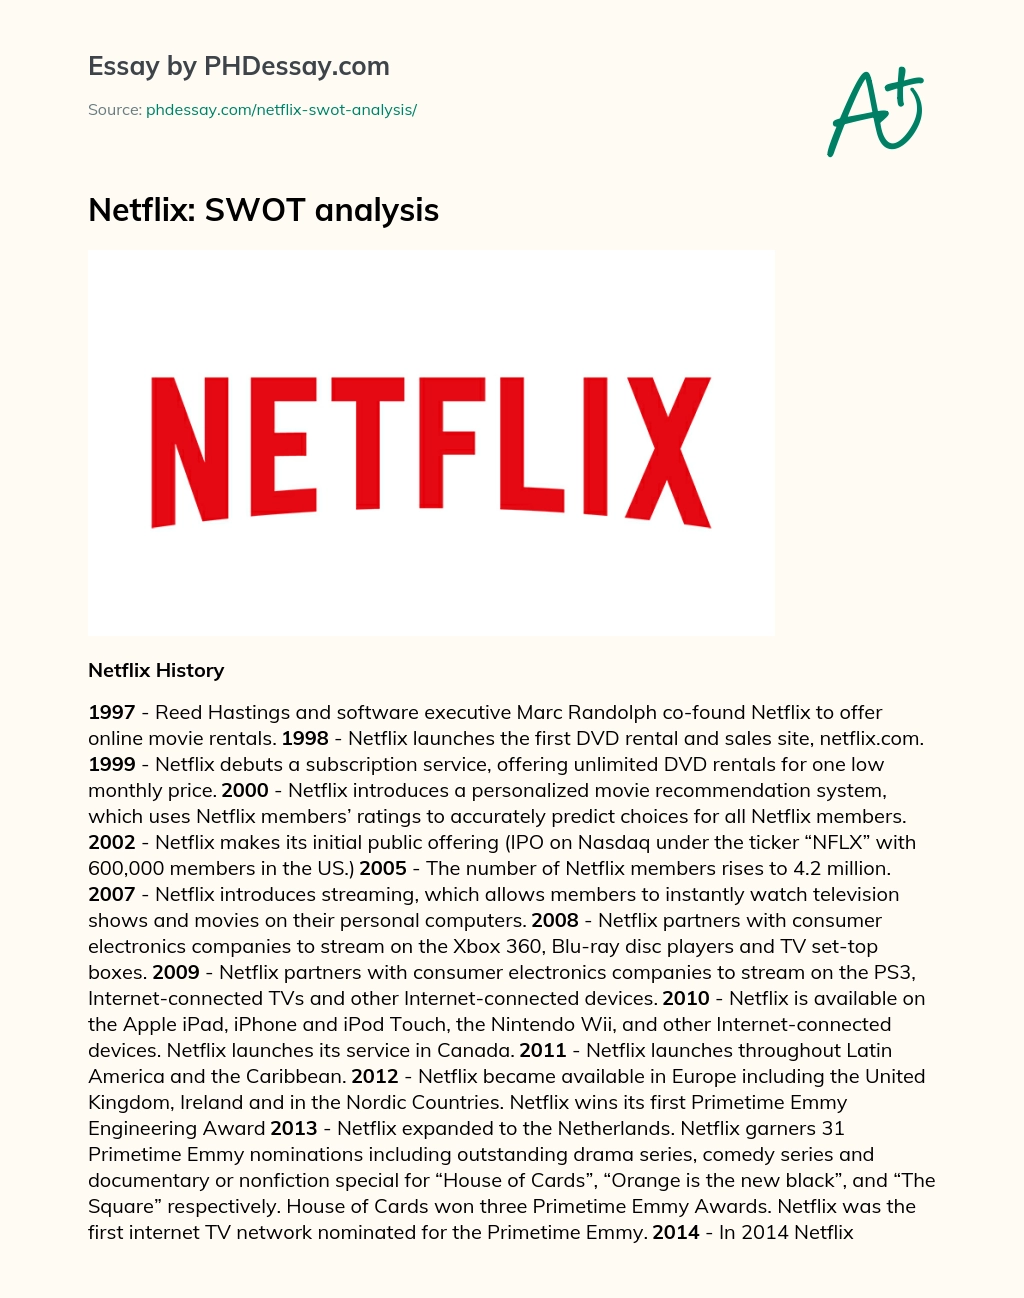 Netflix: SWOT analysis essay